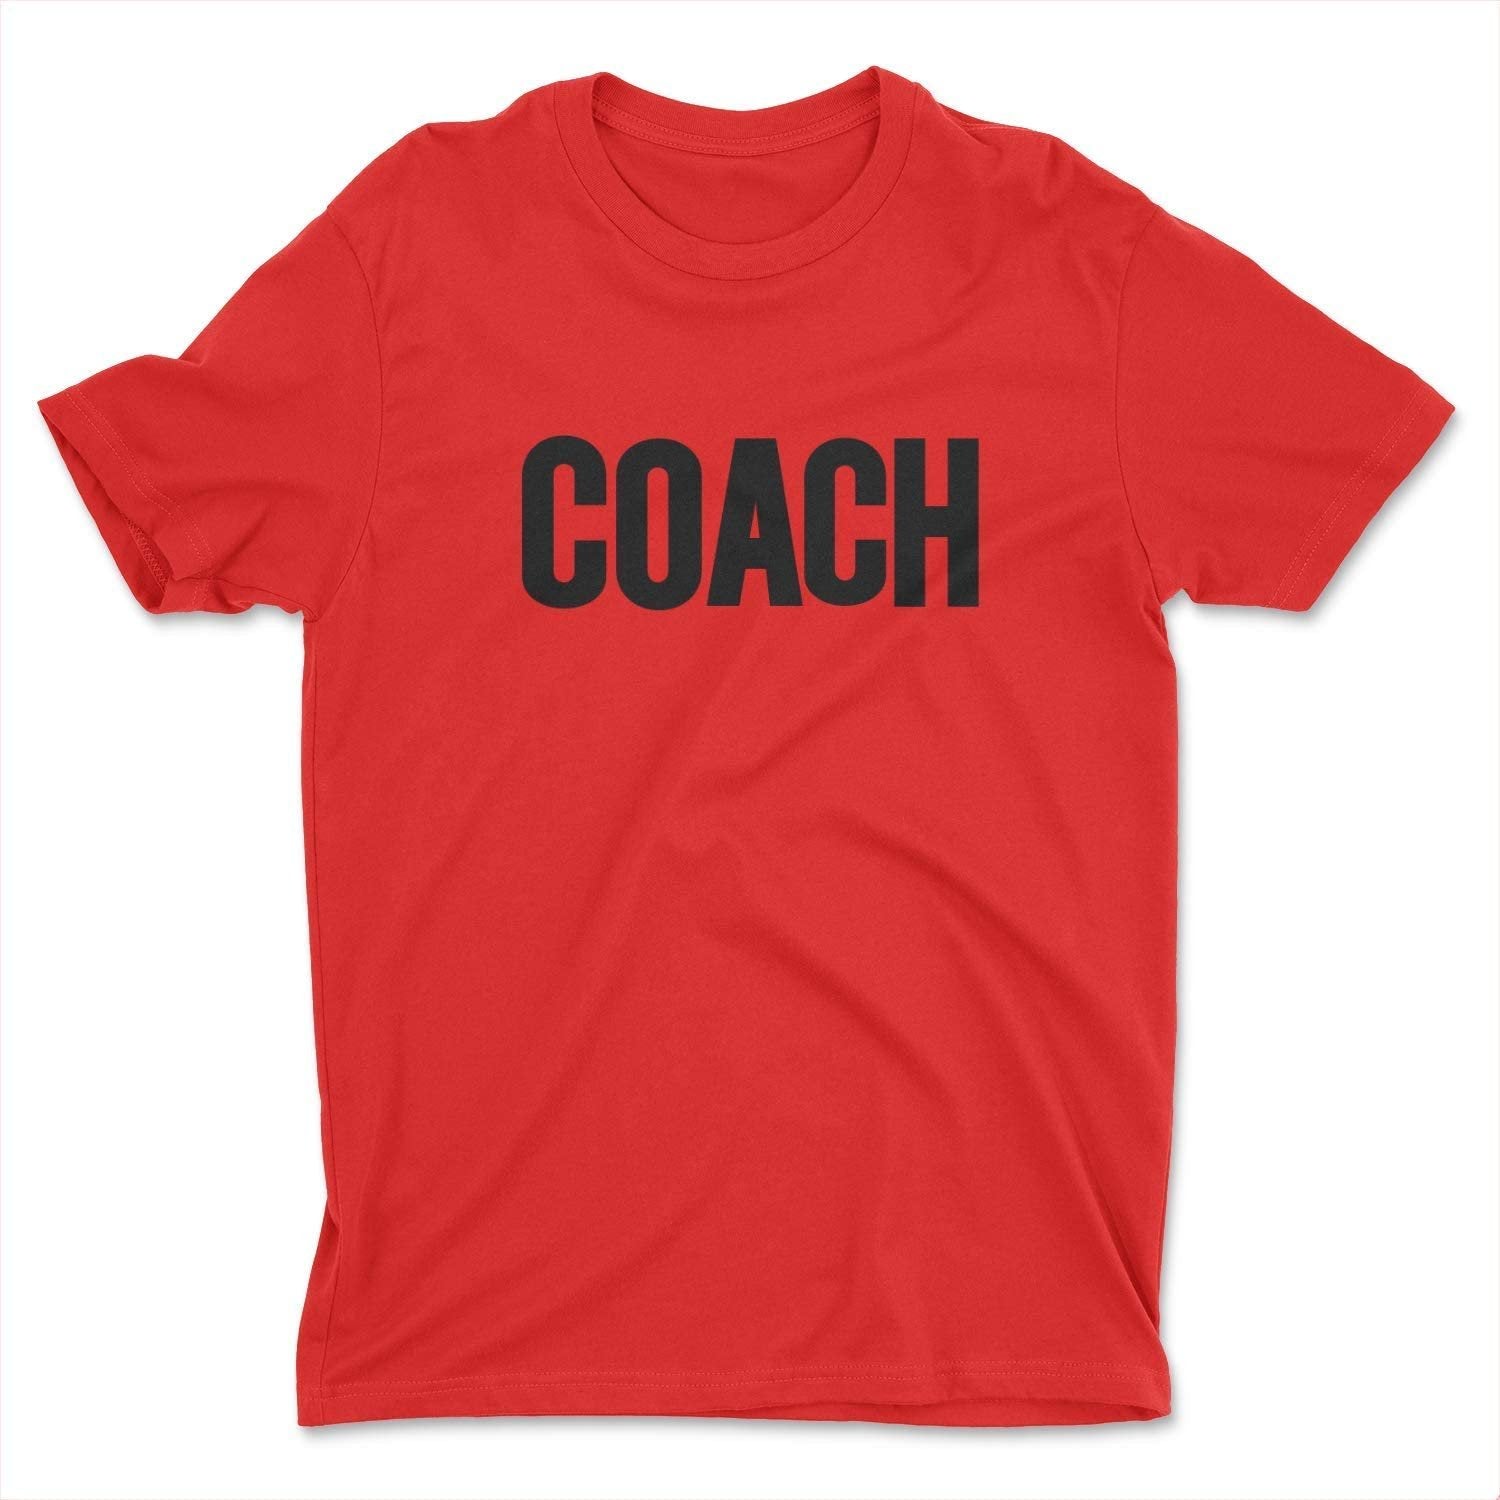 Coach Men's T-Shirt (Solid Design, Red & Black)